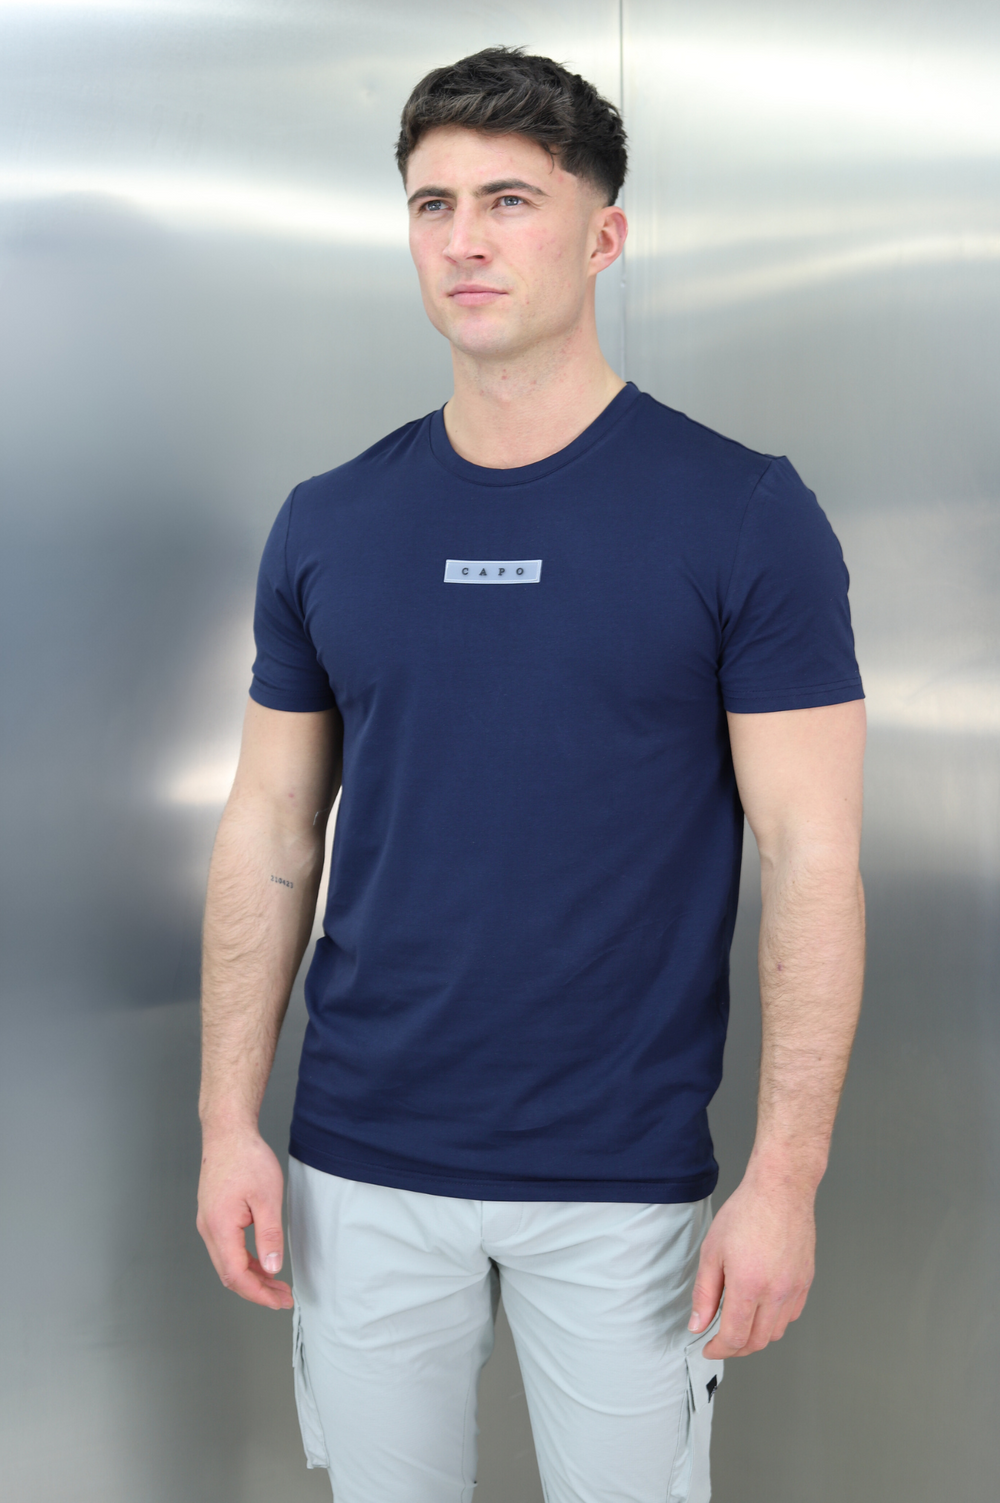 Capo ESSENTIAL T-Shirt - Navy